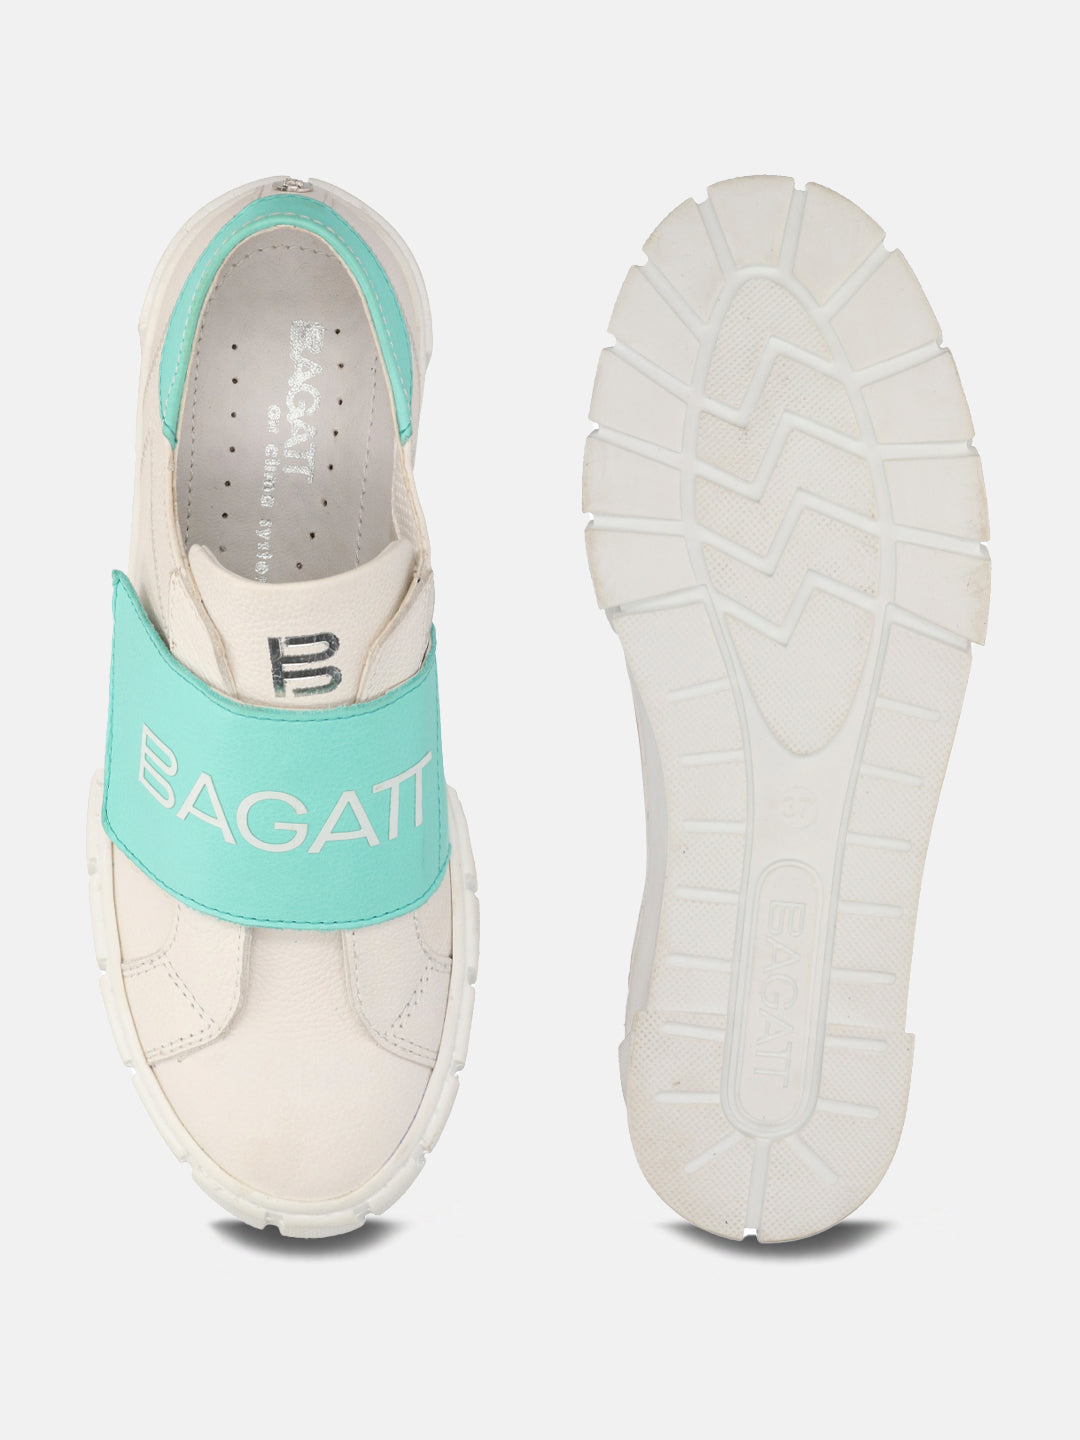 Tia White & Light Blue Sneakers - BAGATT